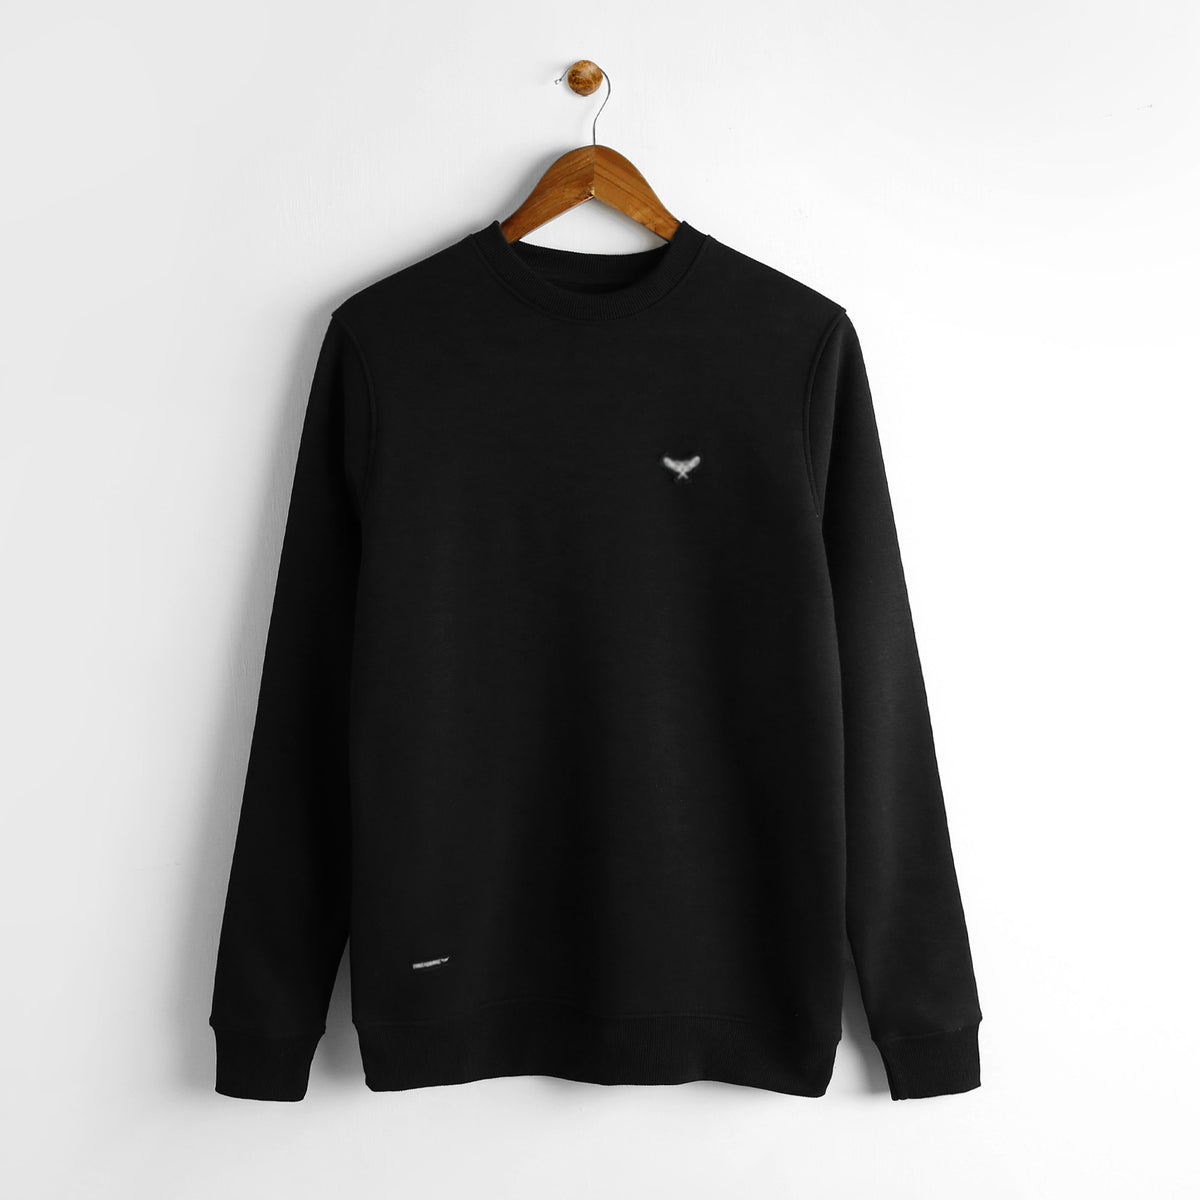 Premium Quality Men Embroidered Black Fleece Sweatshirt